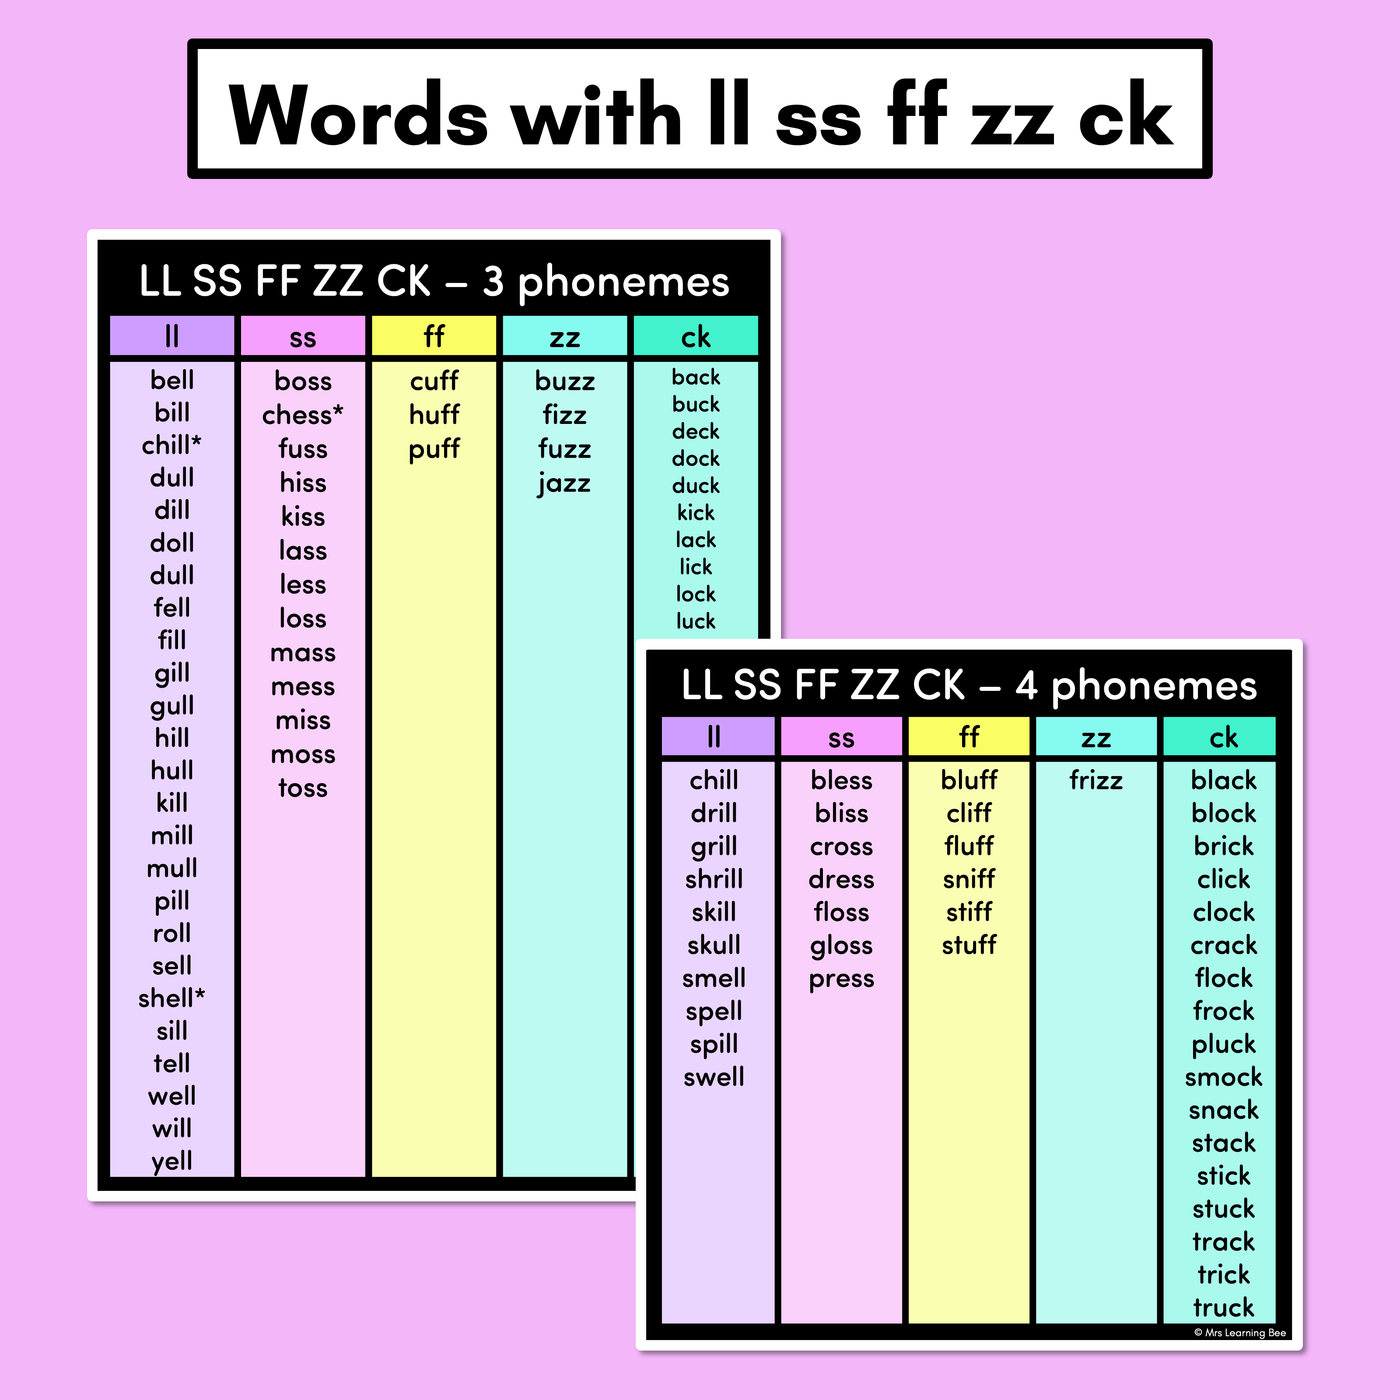 Decodable Word Lists - Consonant Digraphs ch sh th wh ll ss ff zz zz qu ng + x